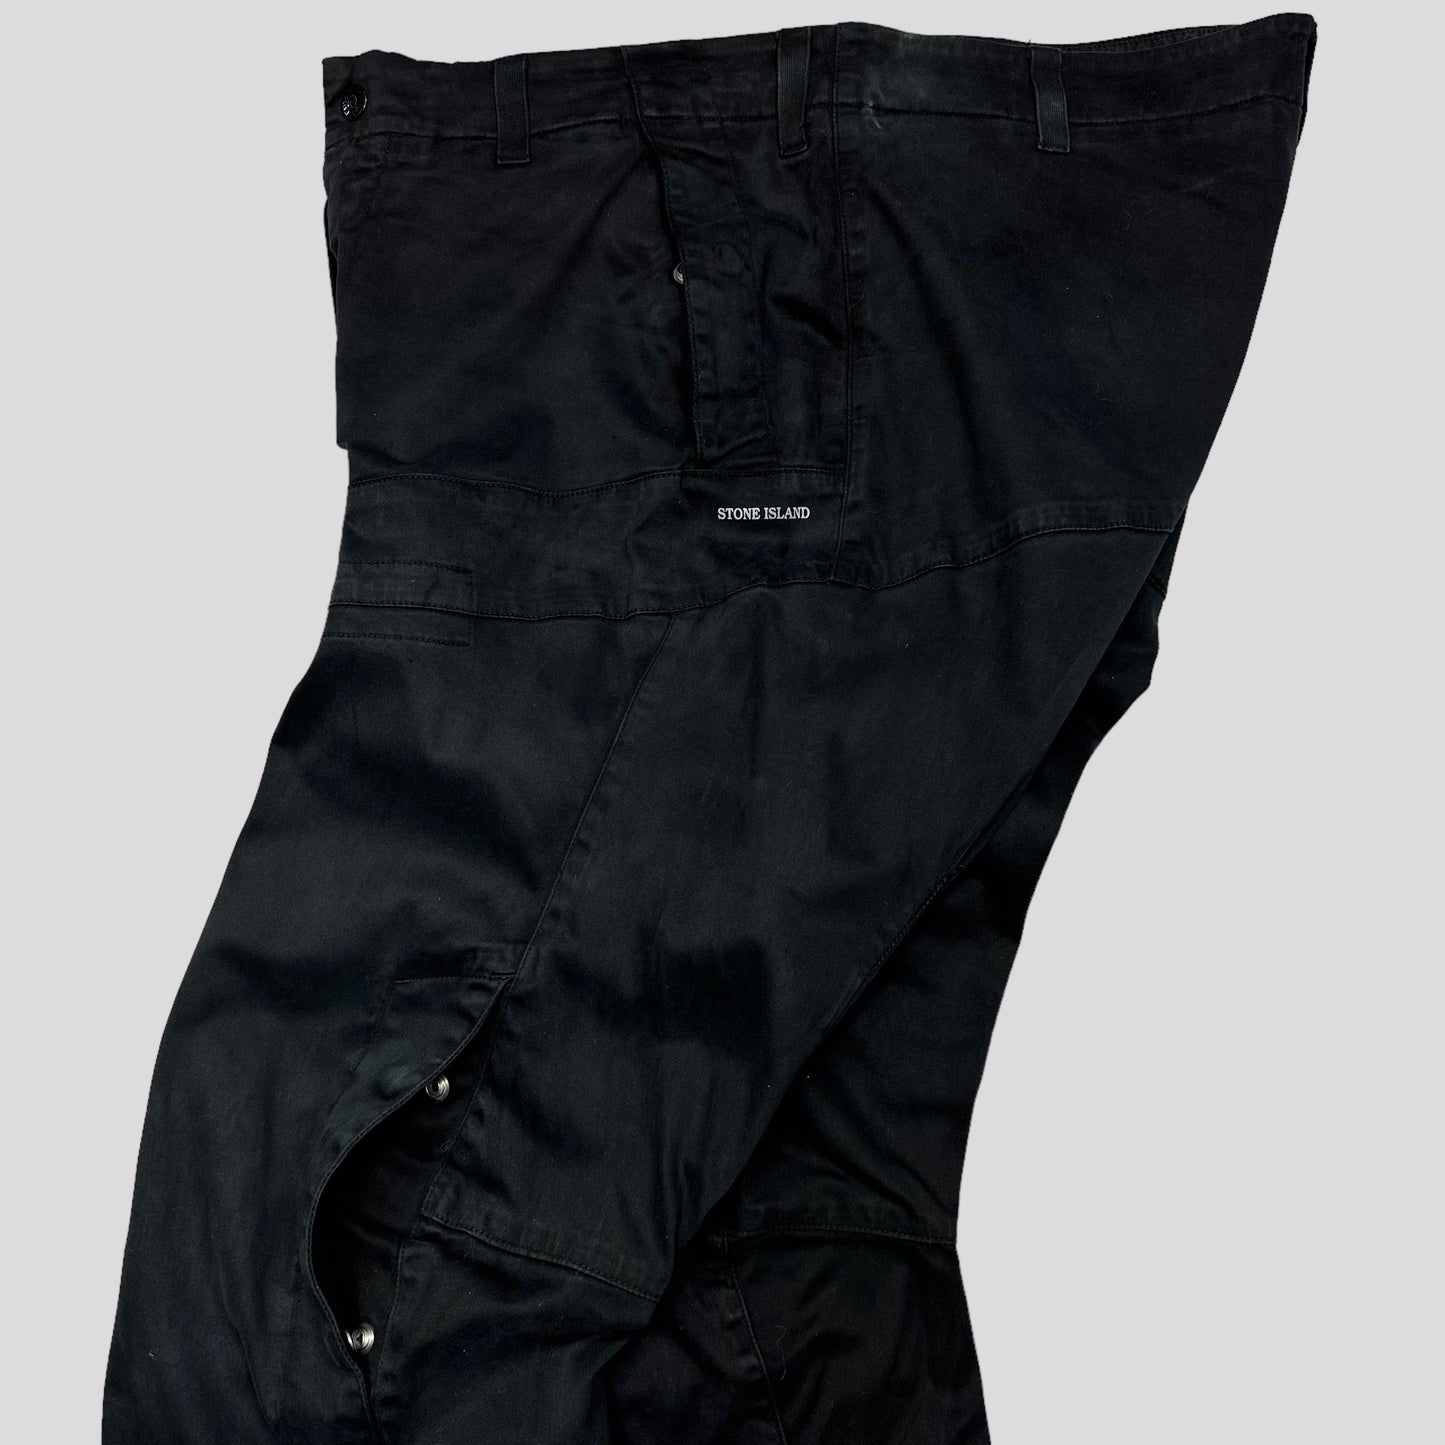 Stone Island SS02 ‘Jet Pants’ Cargo Trousers - IT52